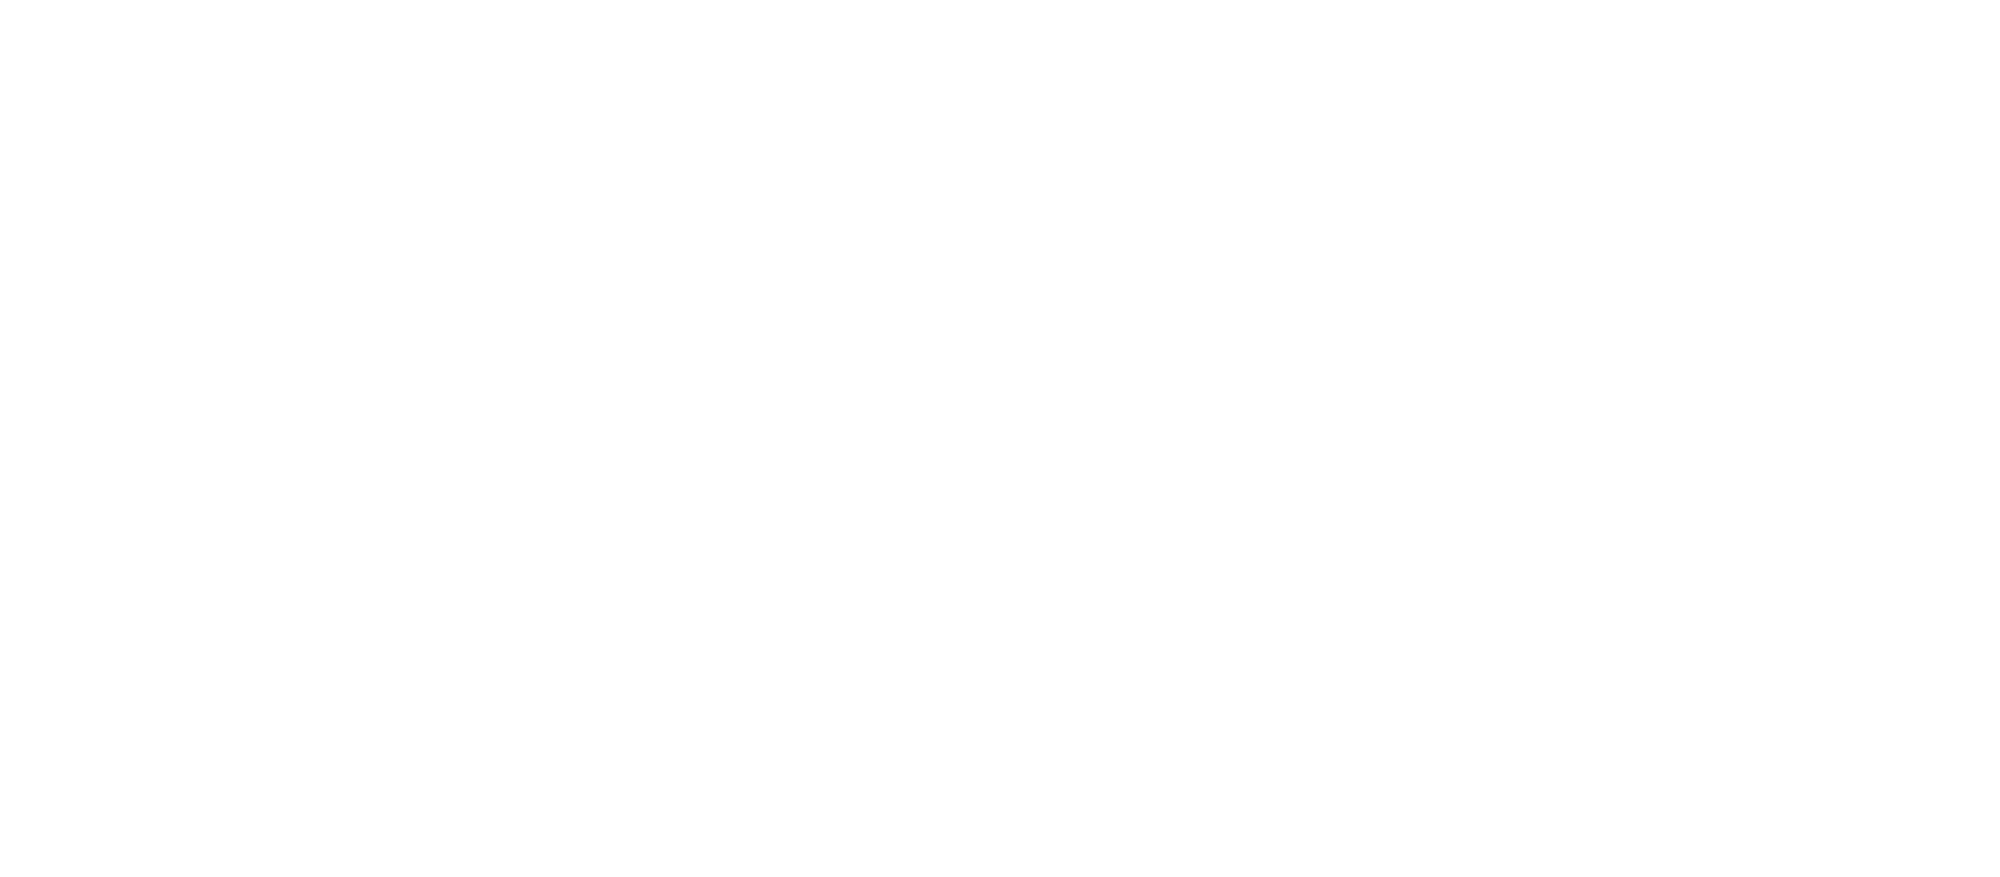 Cochrane Voice